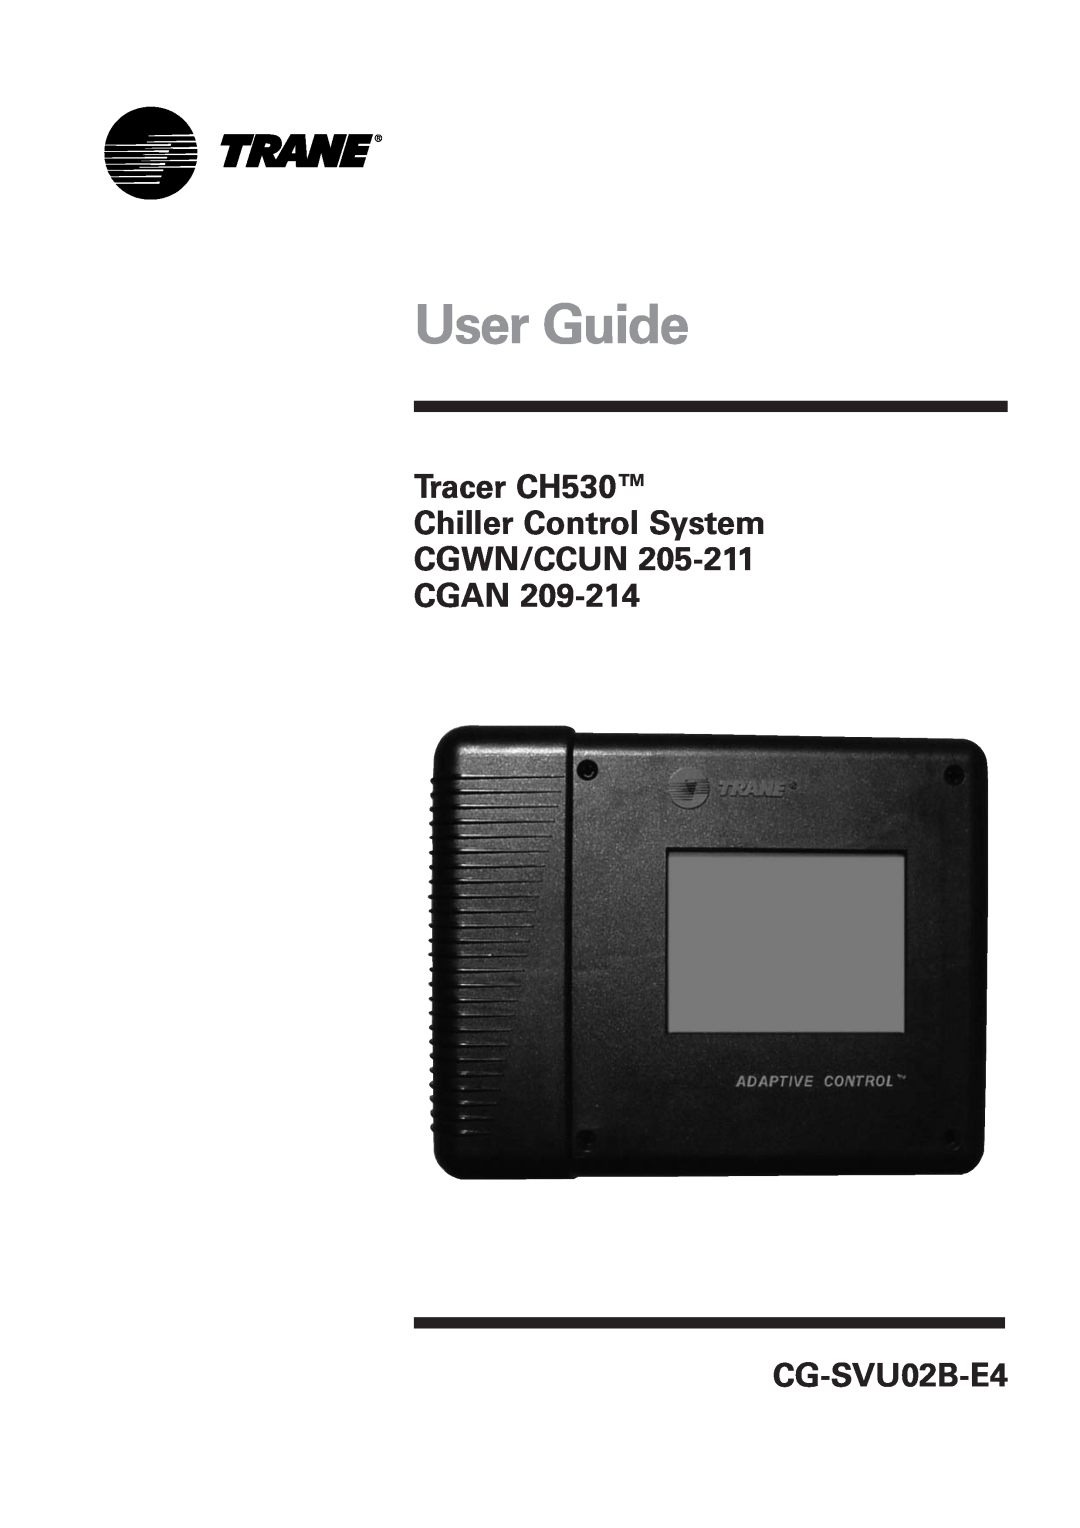 Trane CGAN 209-214, CCUN 205-211 manual Tracer CH530 Chiller Control System CGWN/CCUN CGAN, CG-SVU02B-E4, User Guide 